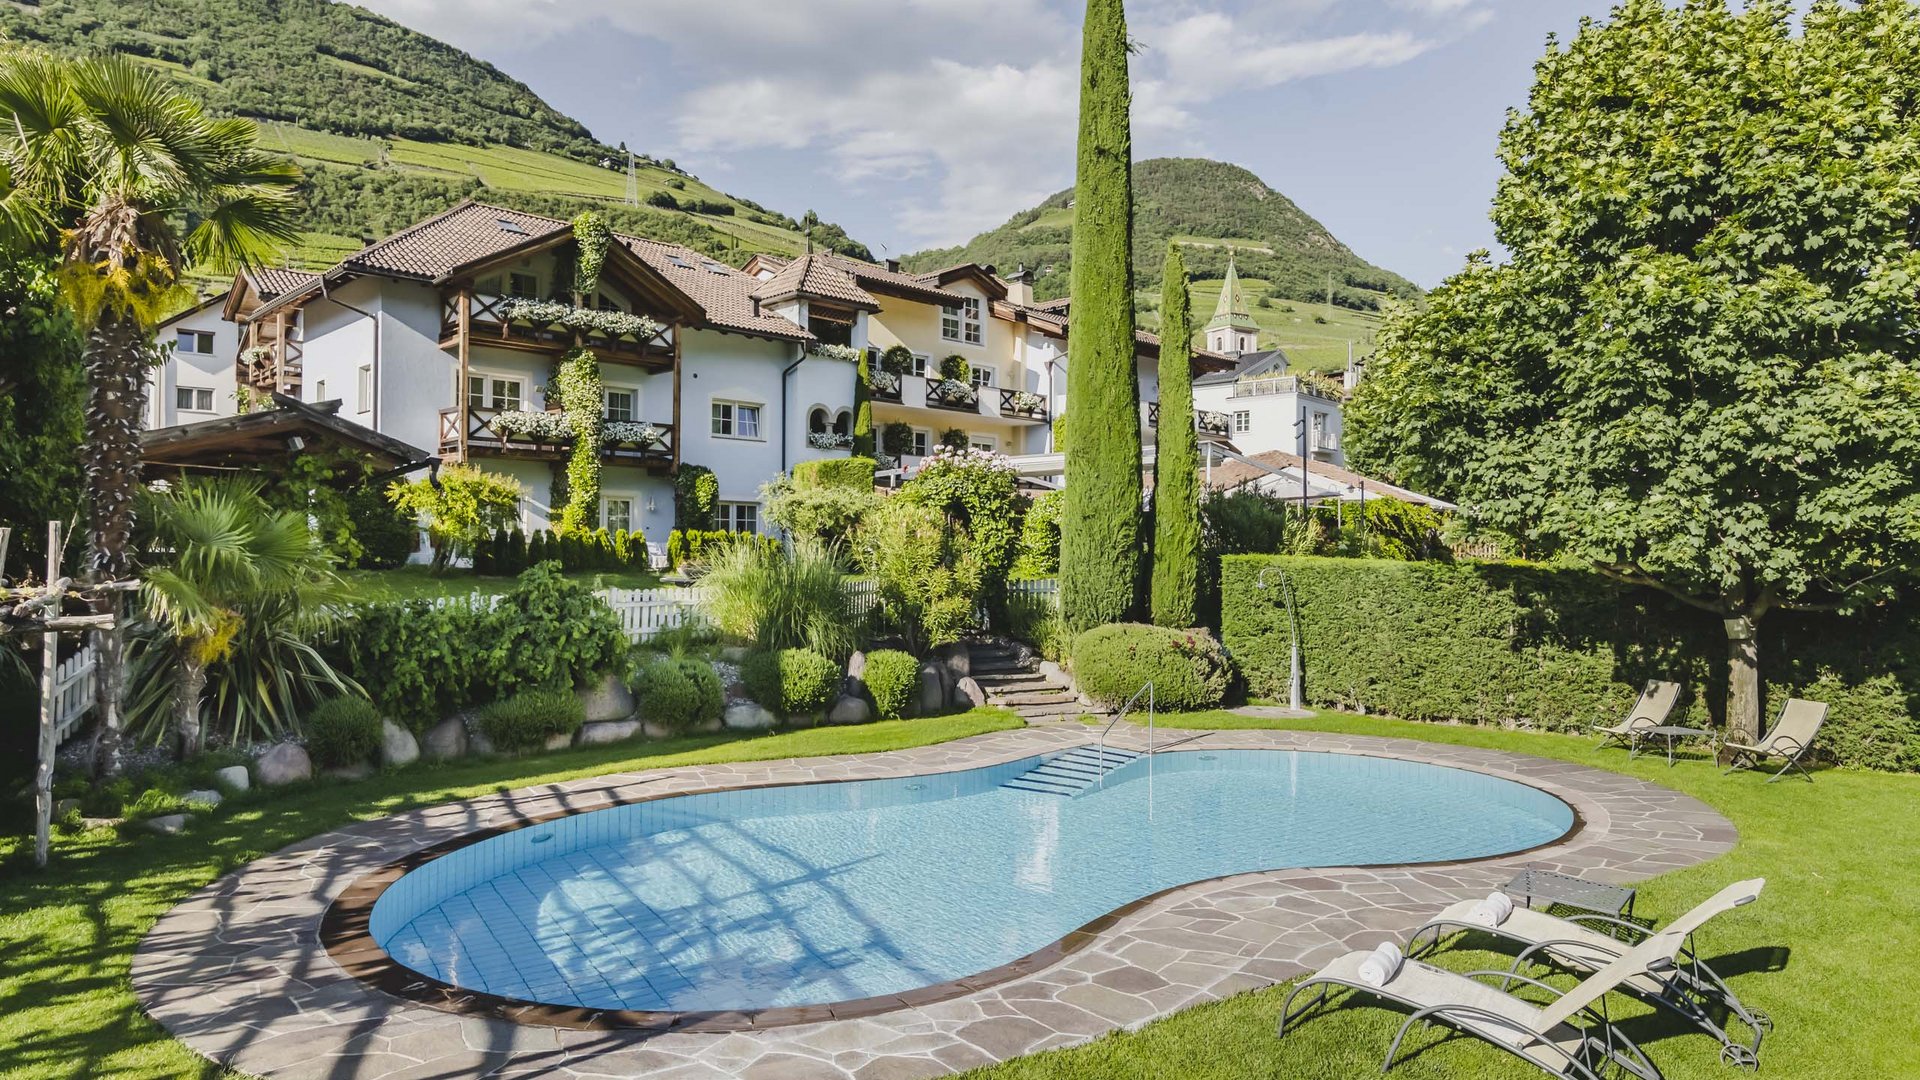 Bolzano: hotel with pool wanted?